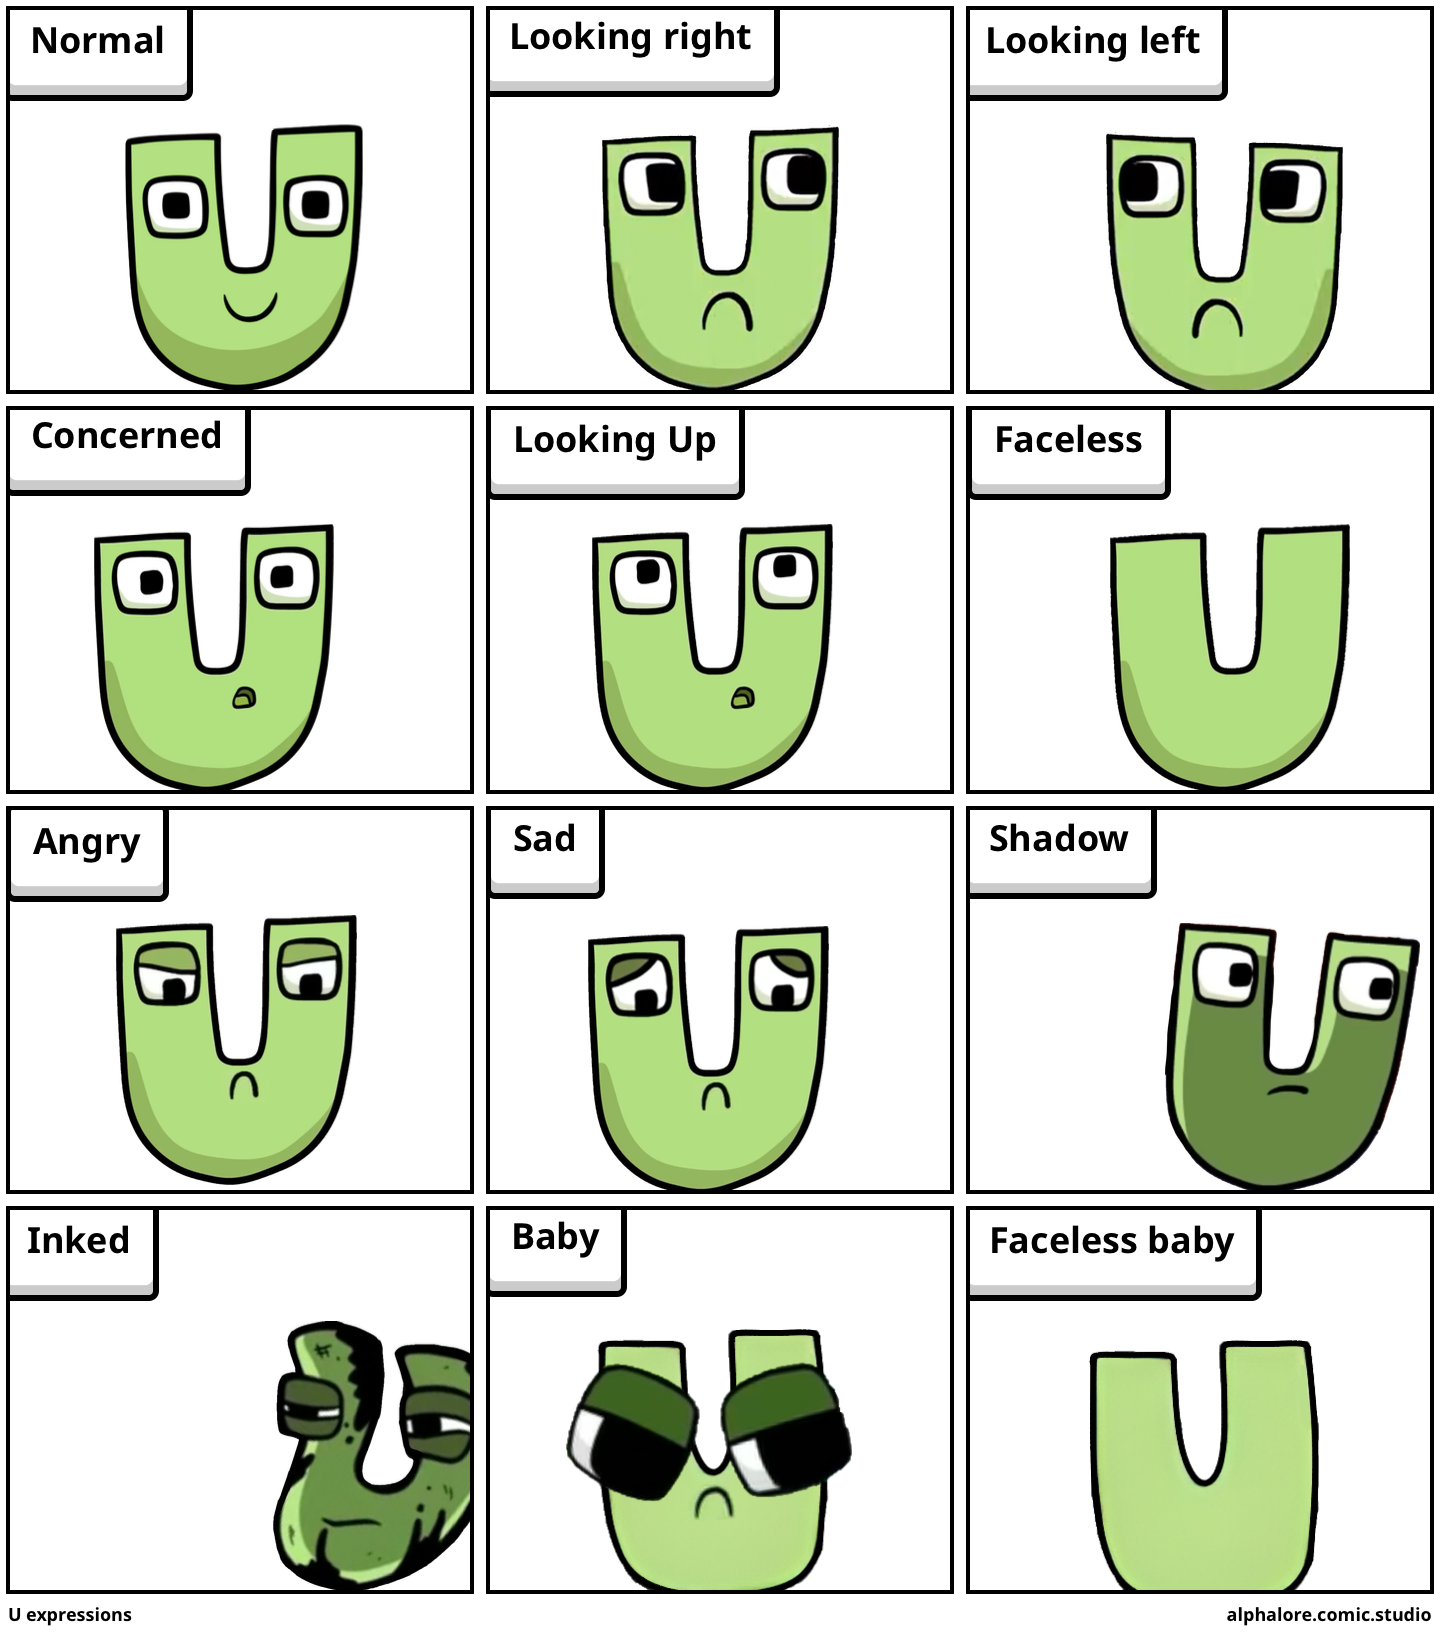 U expressions